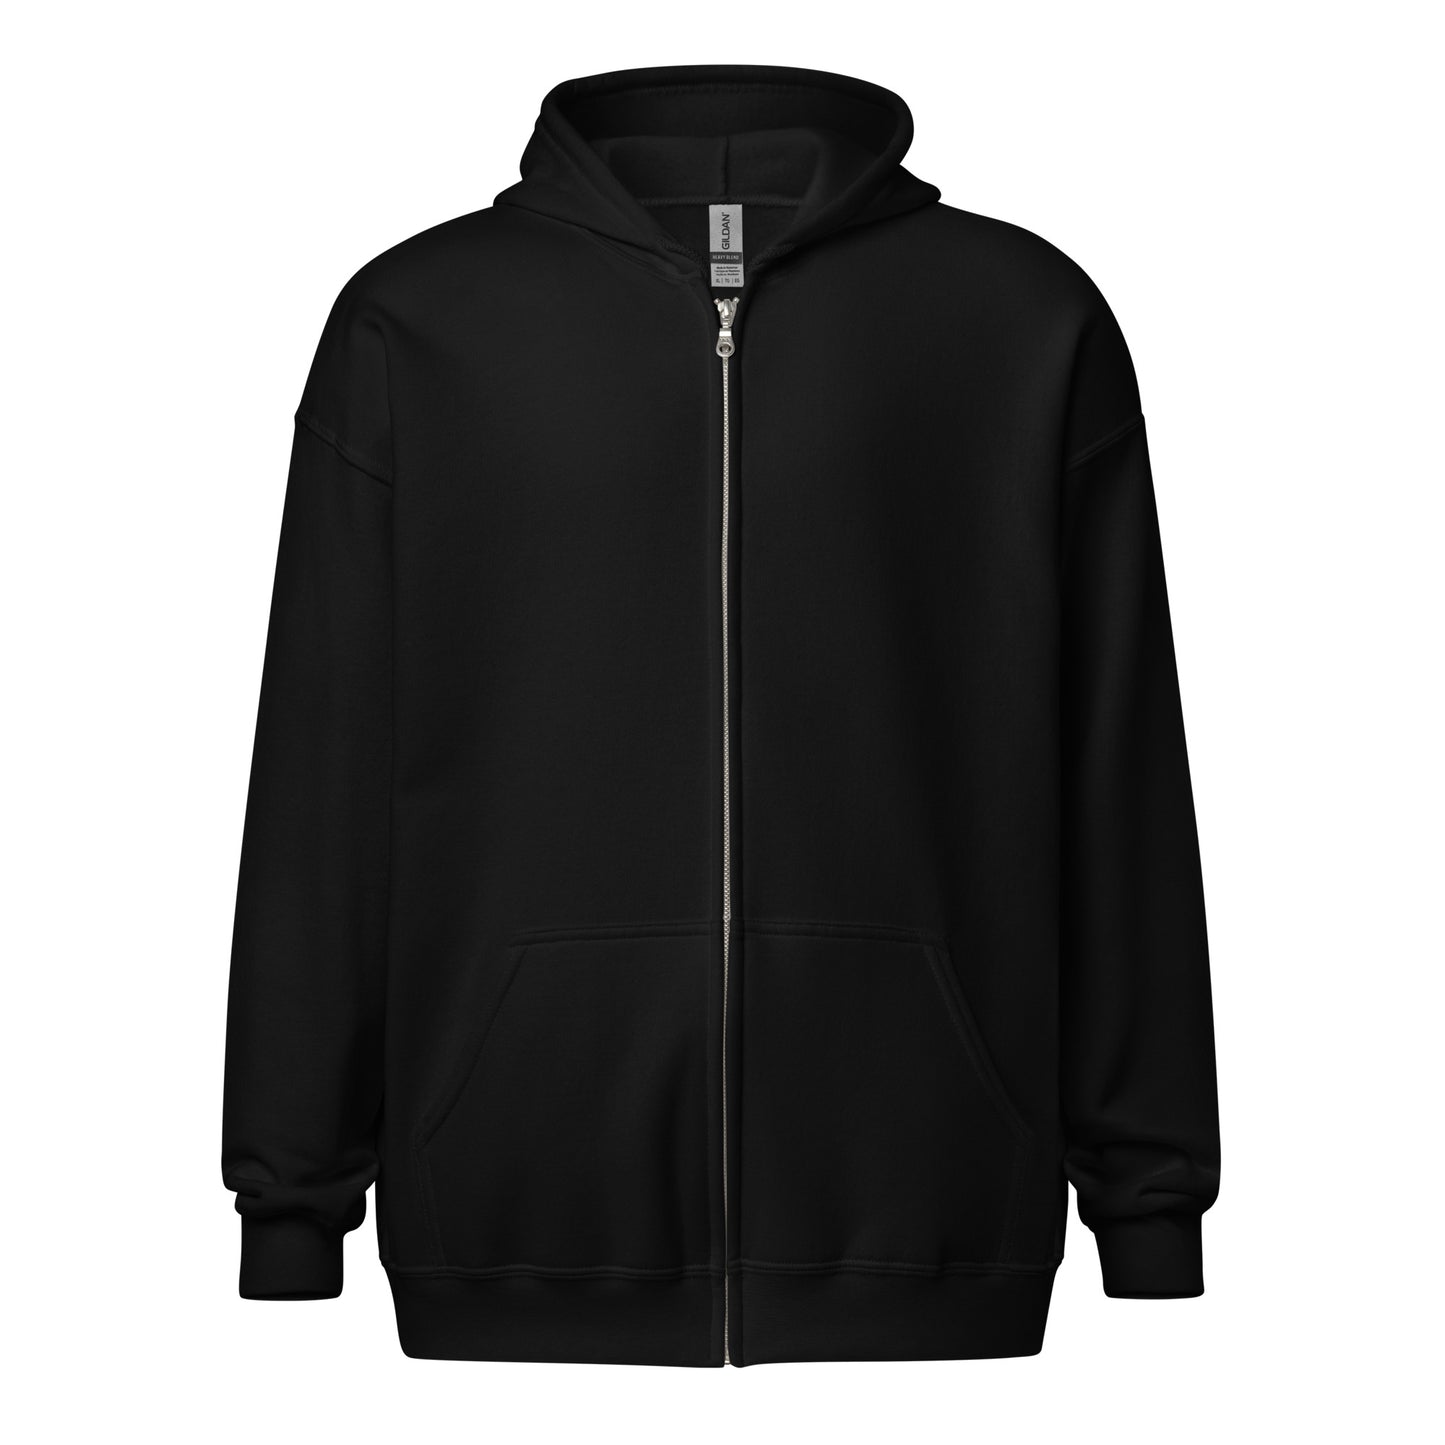 Unisex heavy blend zip hoodie- Learn